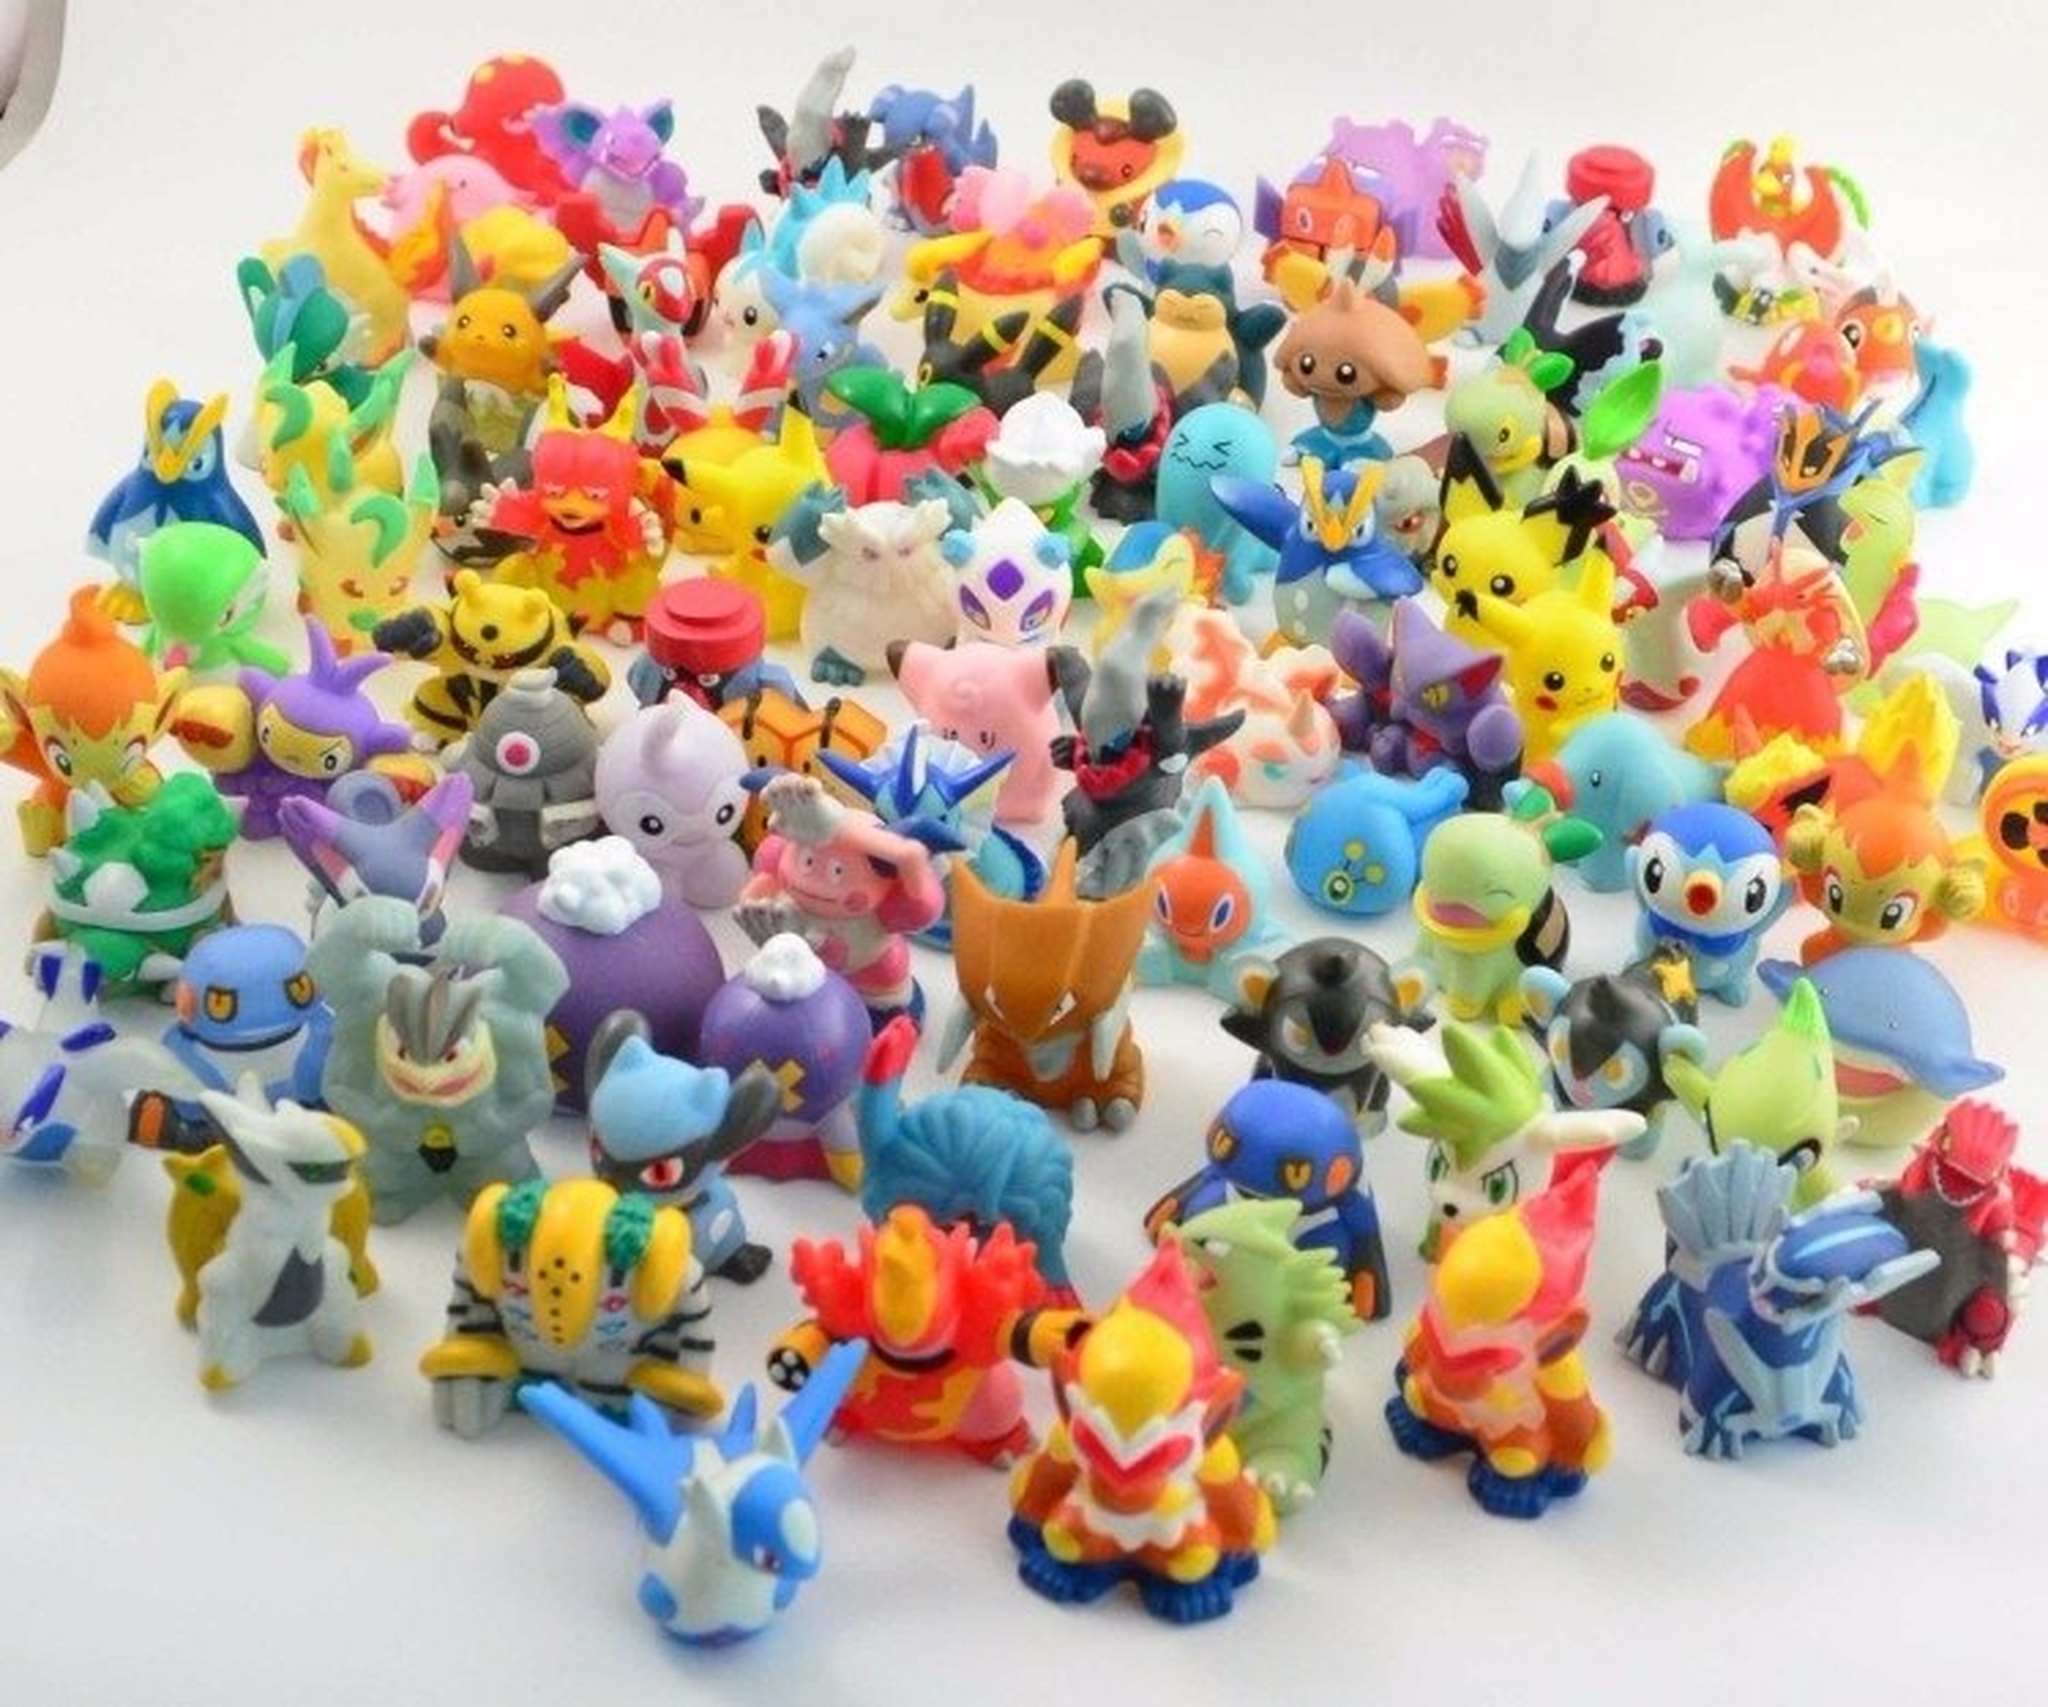 Bonecos Brinquedo Pokemon Kit 10 Capsulas Pokebola Dedoche em